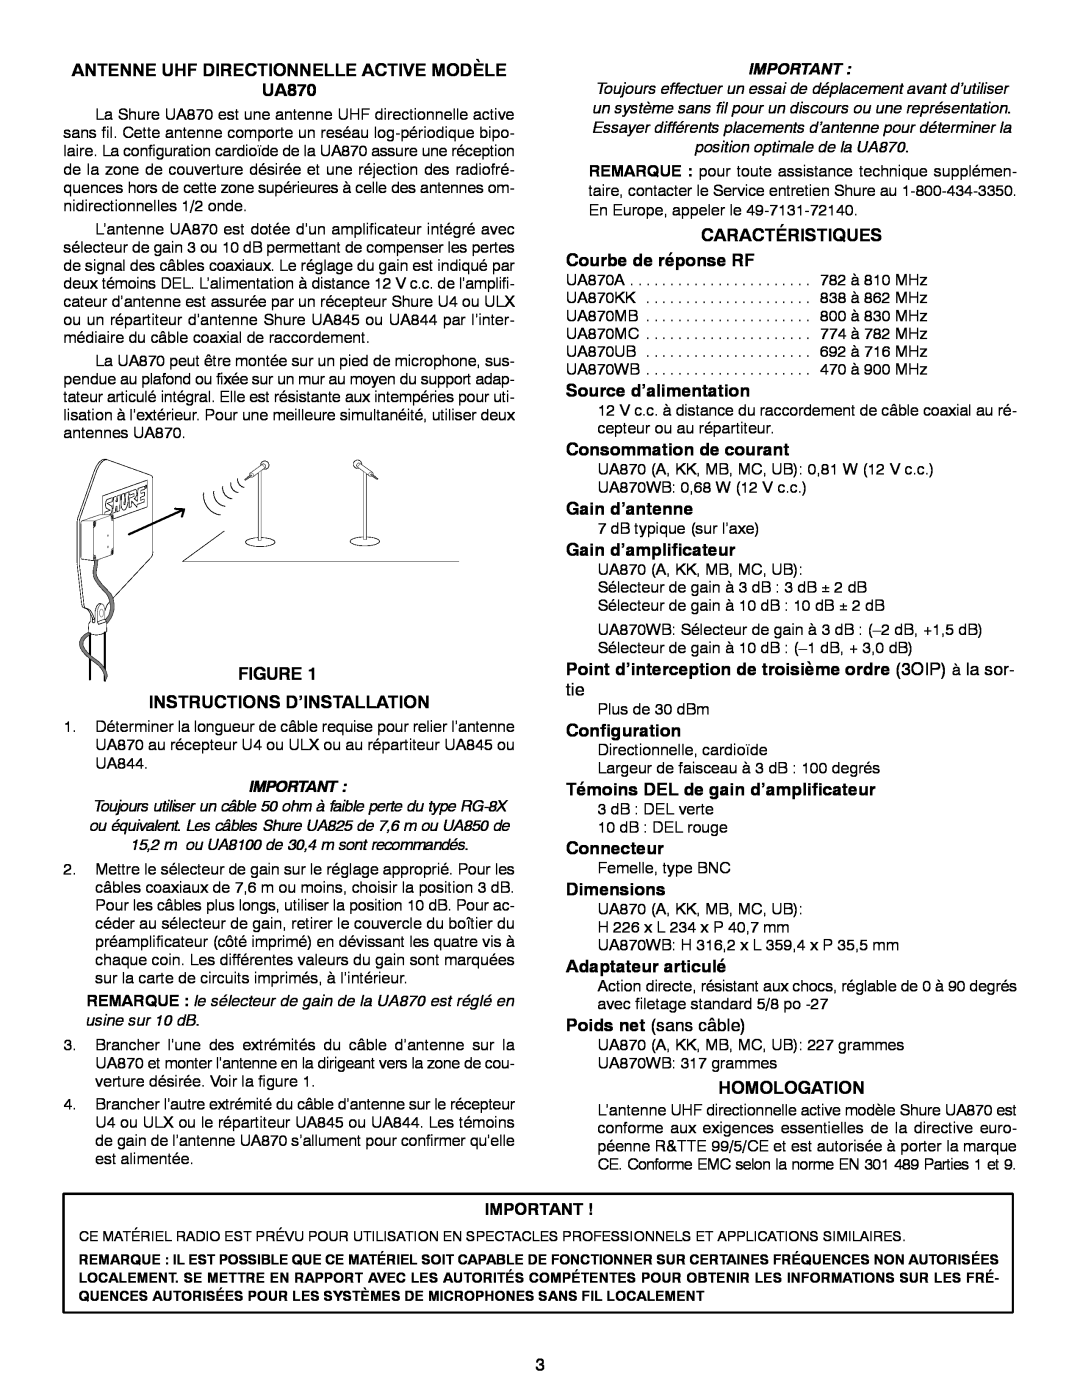 Shure installation instructions ANTENNE UHF DIRECTIONNELLE ACTIVE MODÈLE UA870 